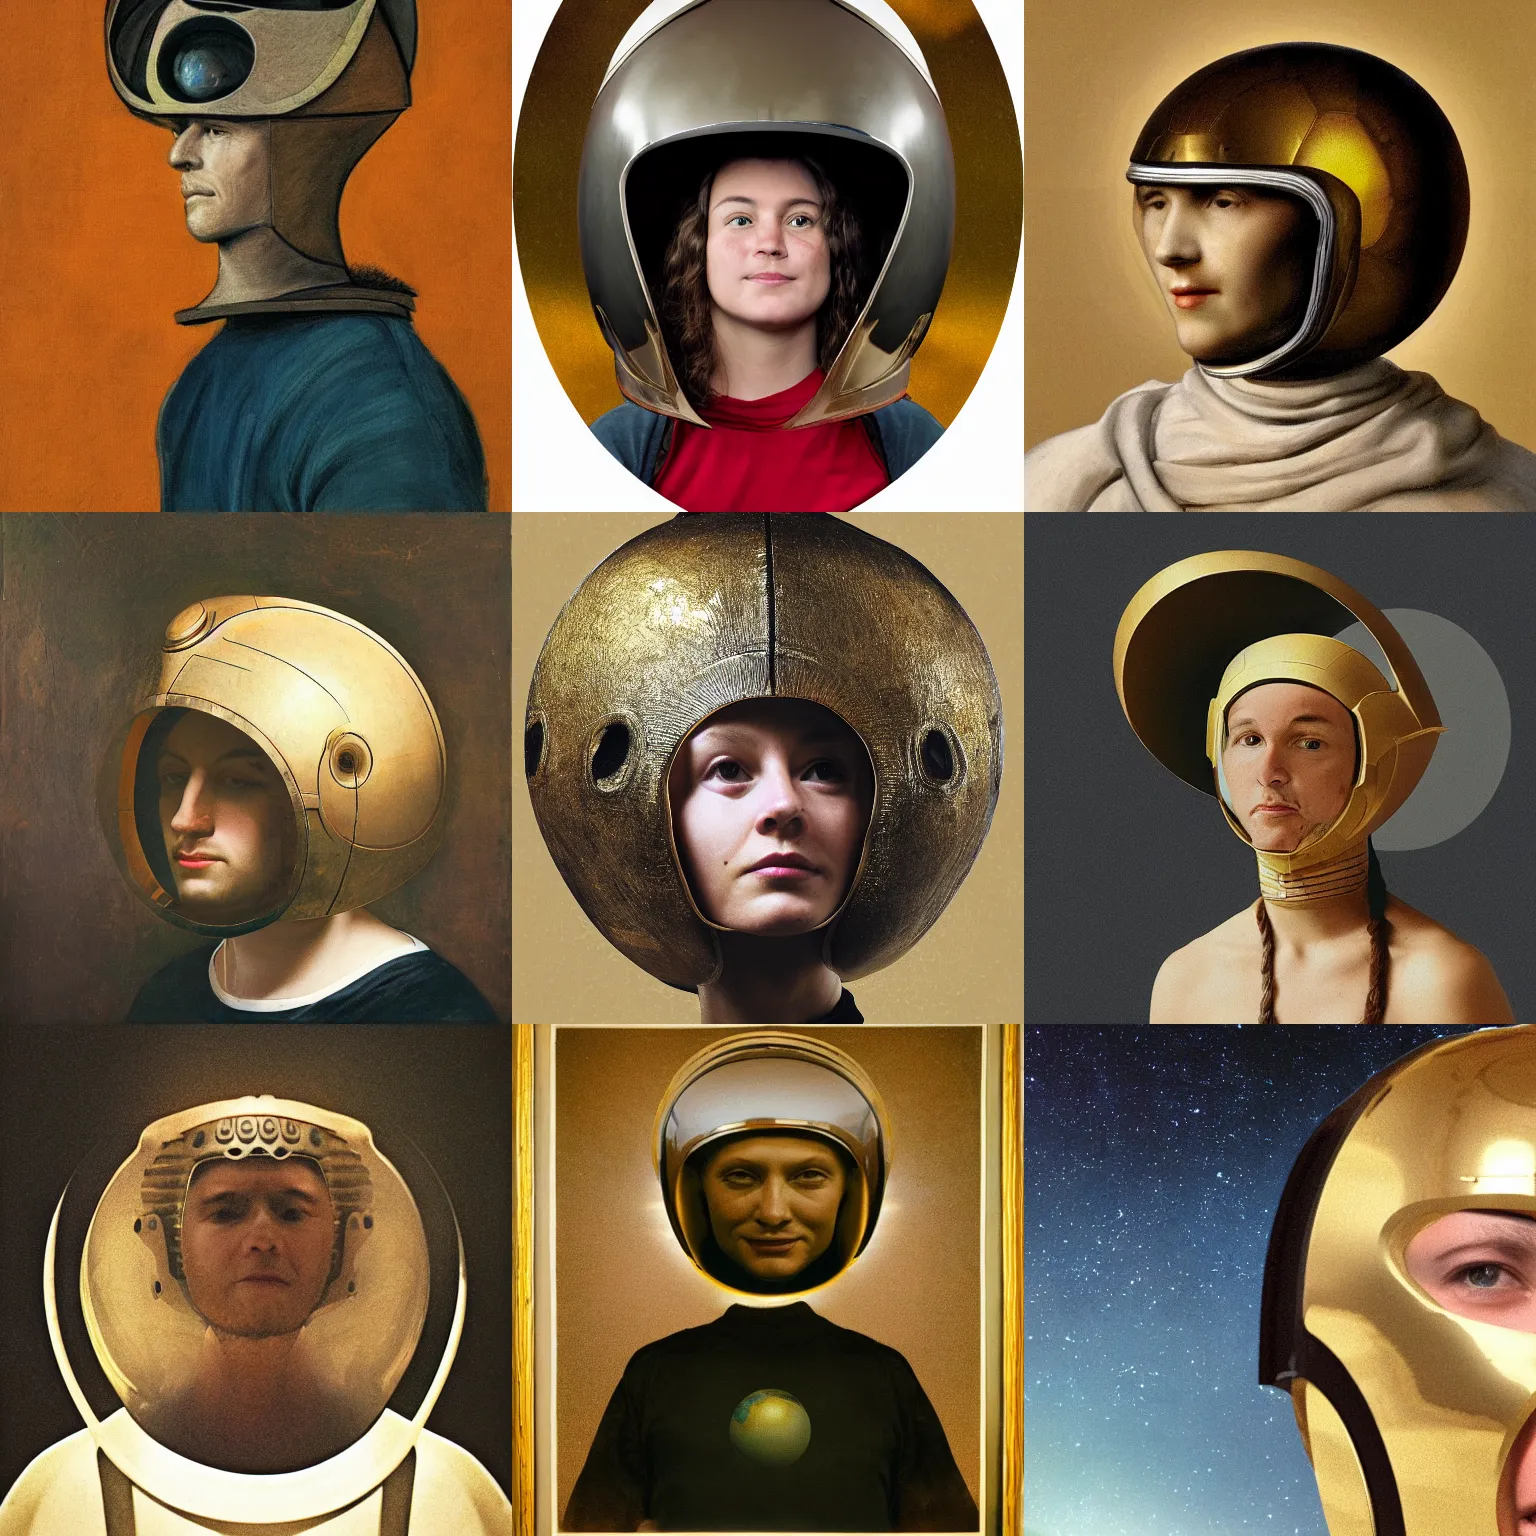 Prompt: portrait of person wearing planet venus helmet